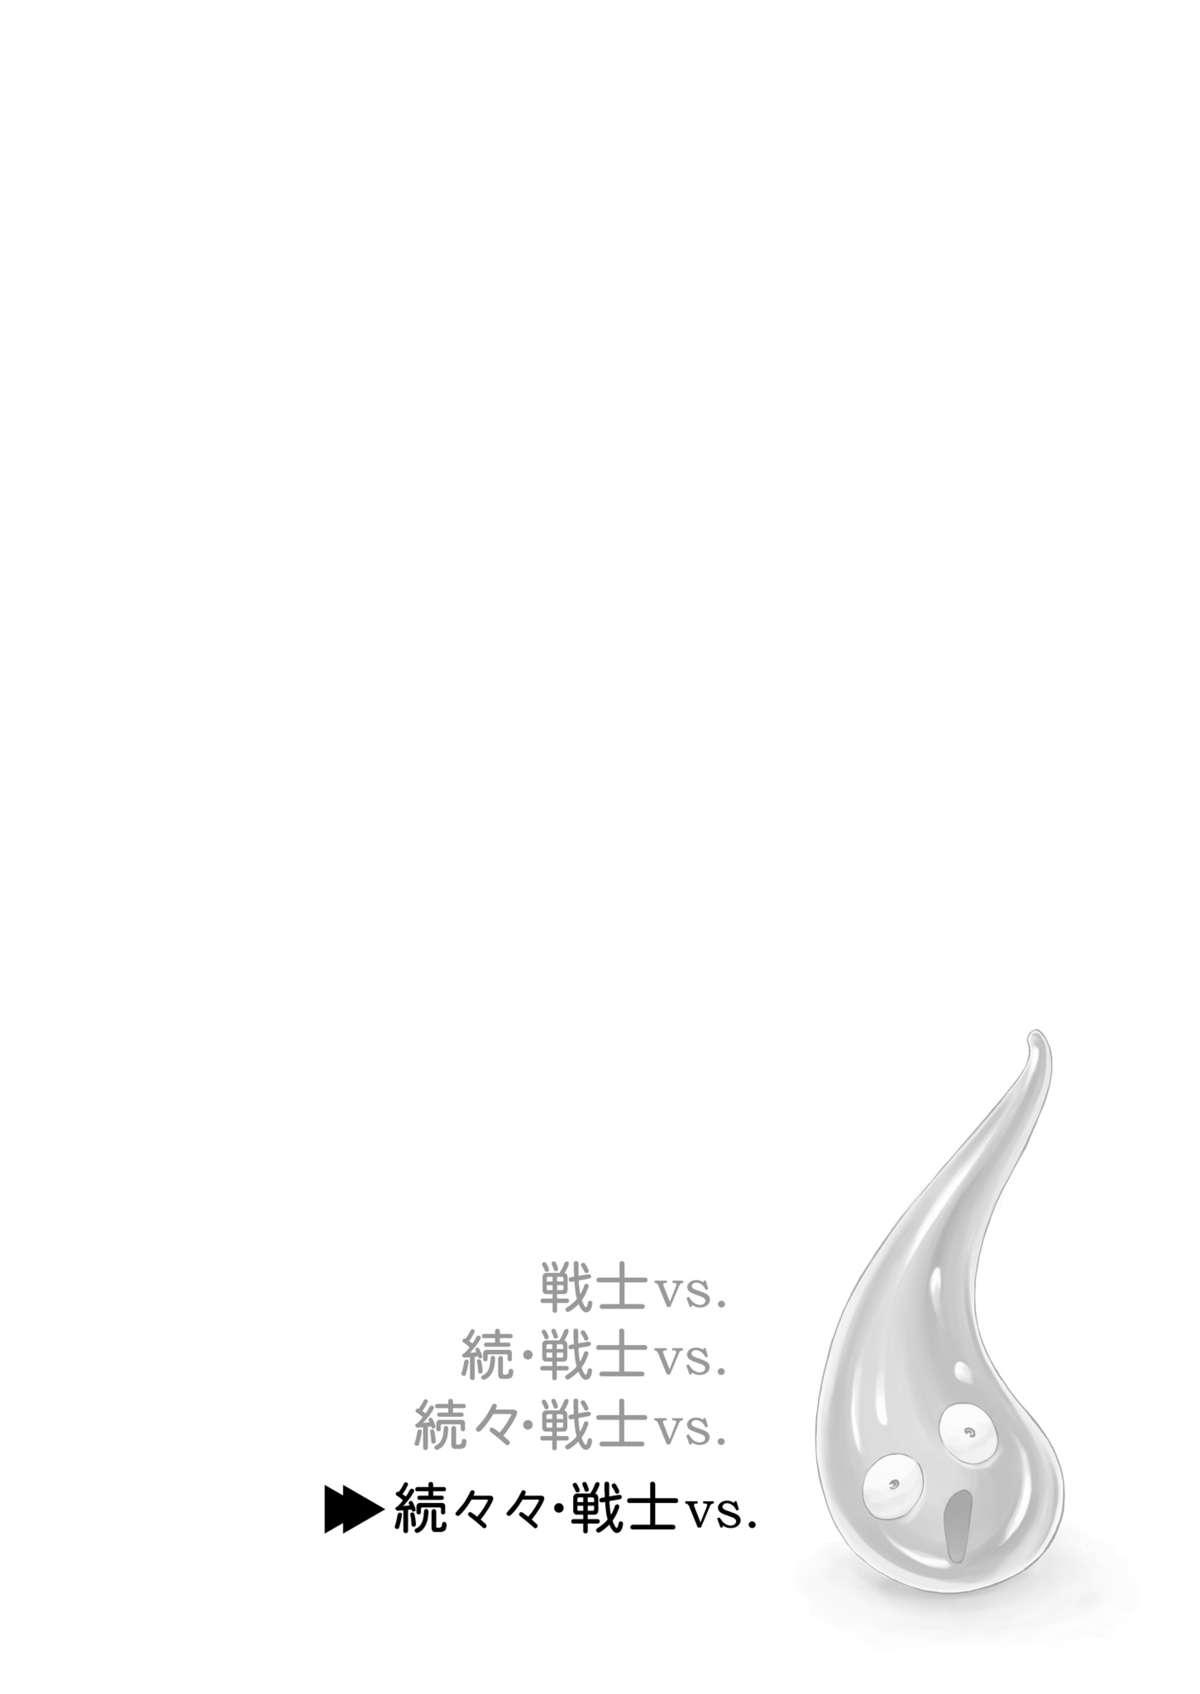 Pantyhose Zokuzokuzoku Senshi vs. - Dragon quest iii Mas - Page 2